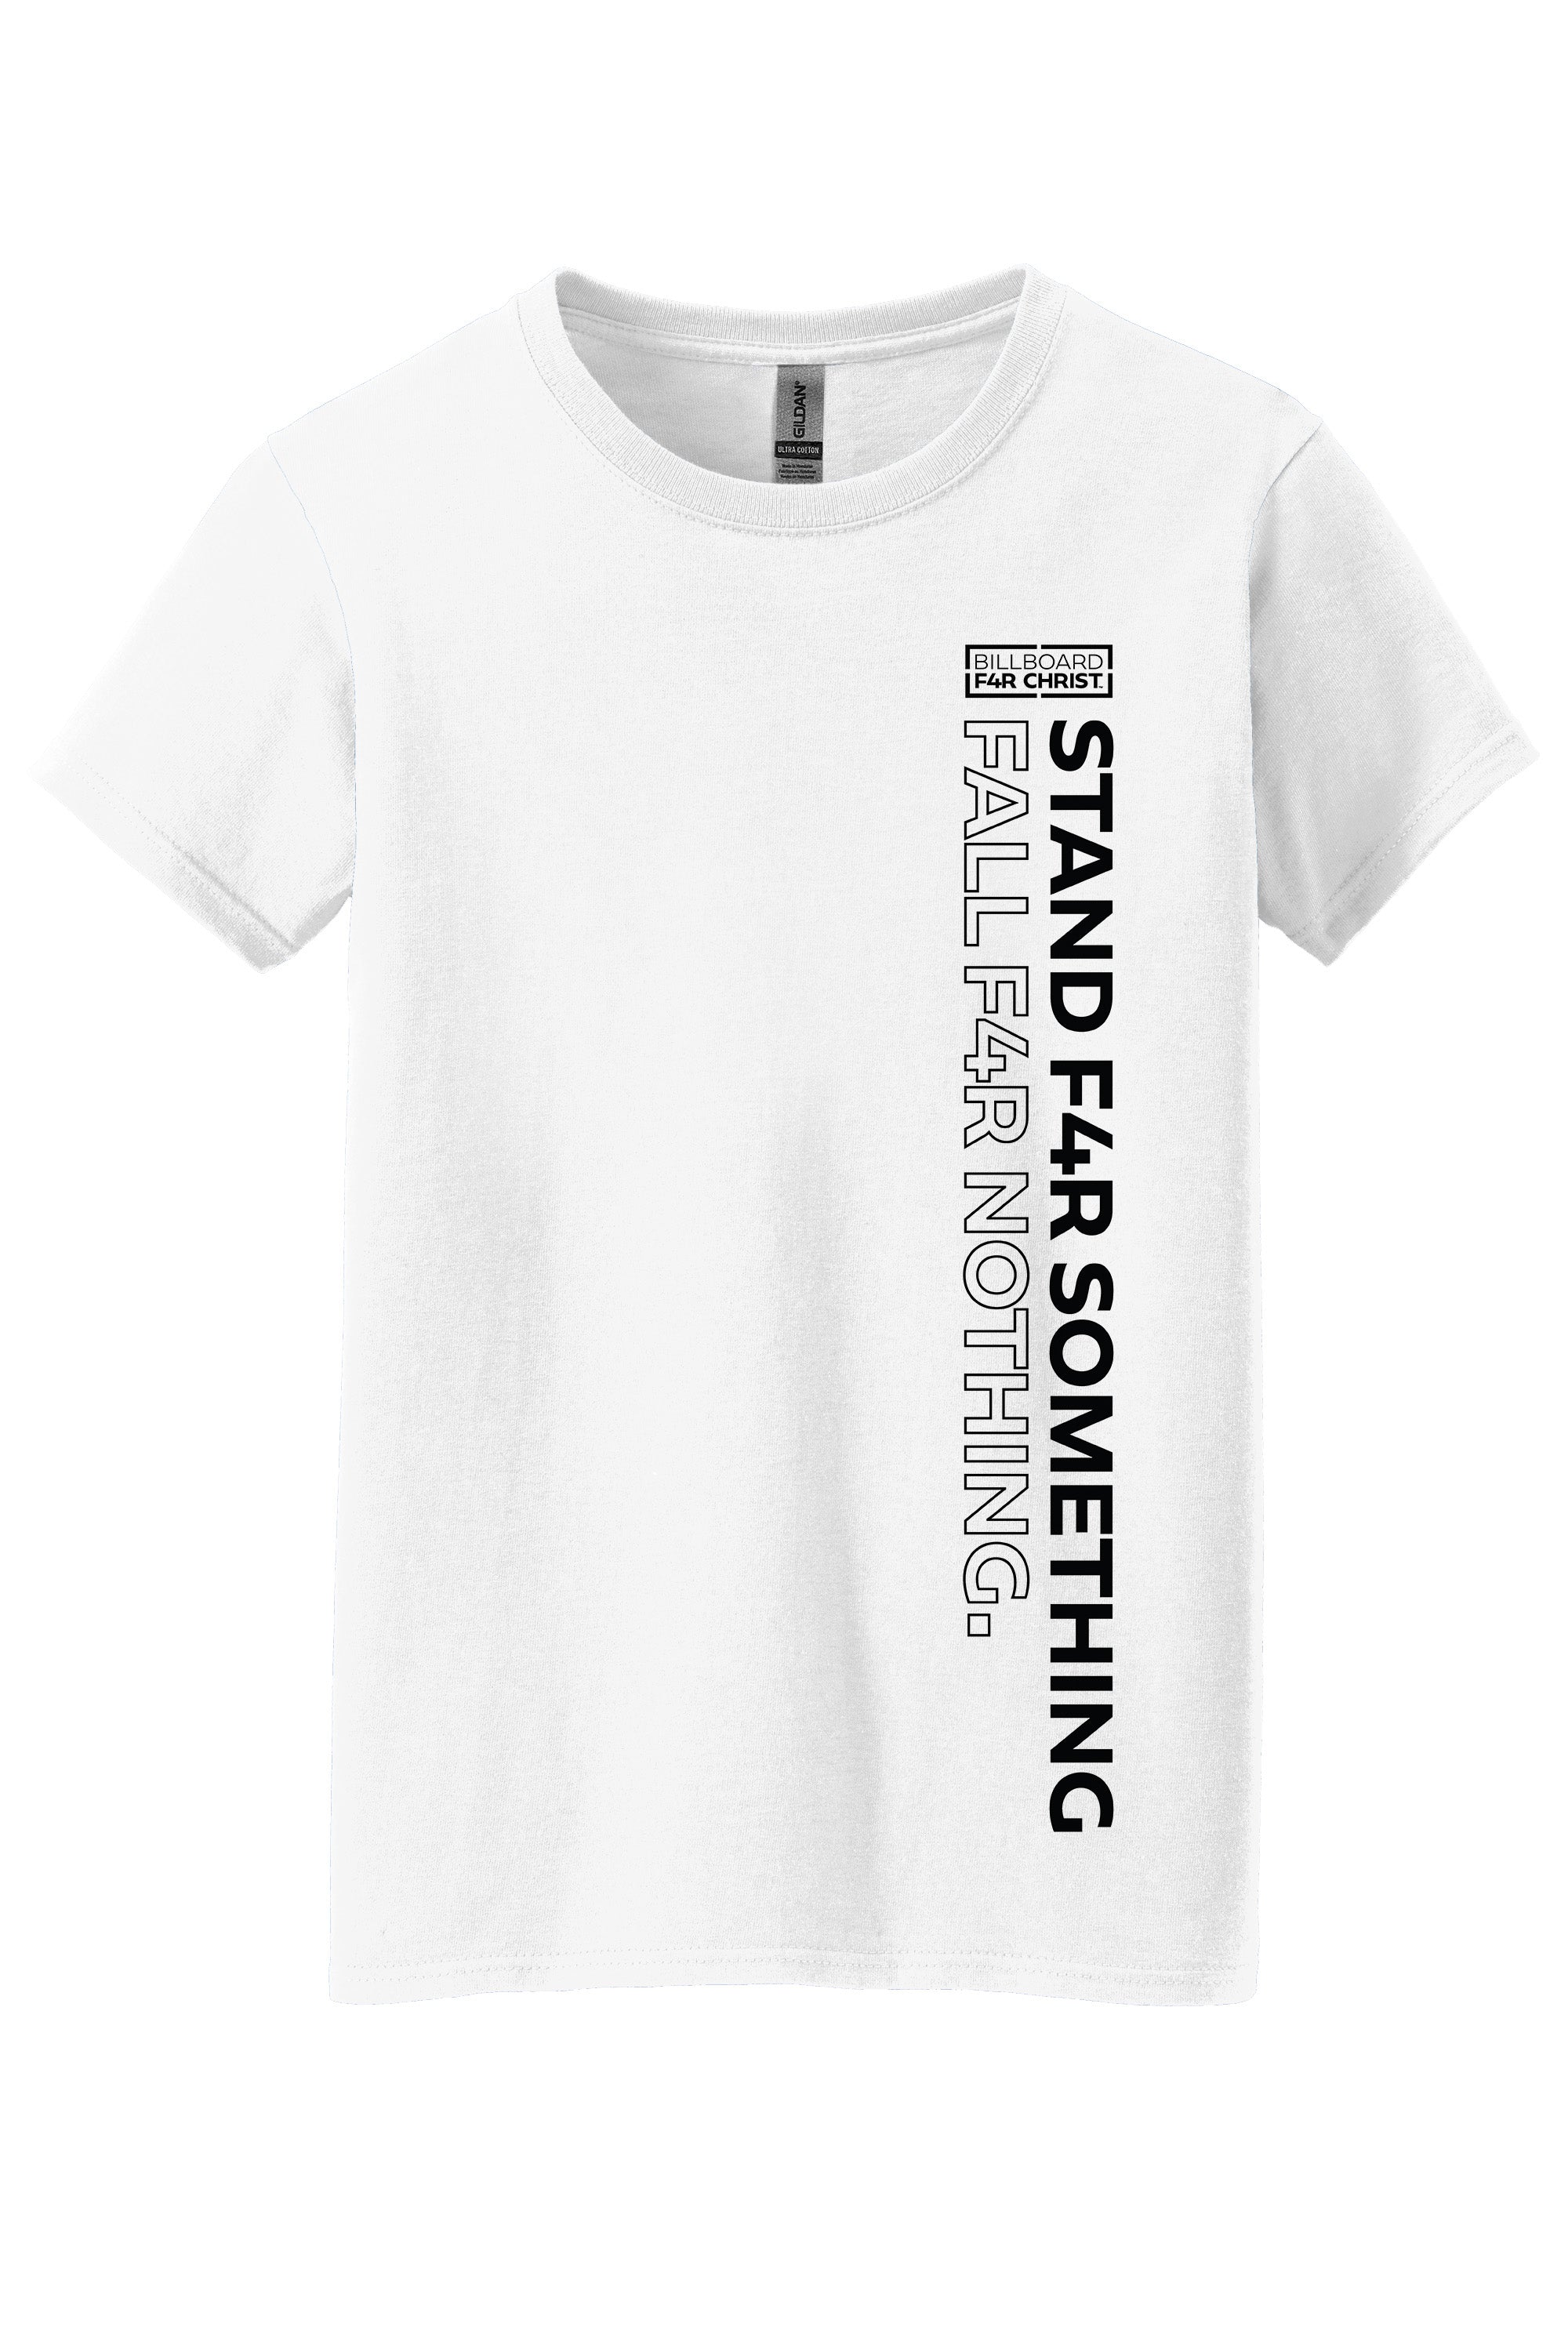 Stand F4R Something Women's T-Shirt